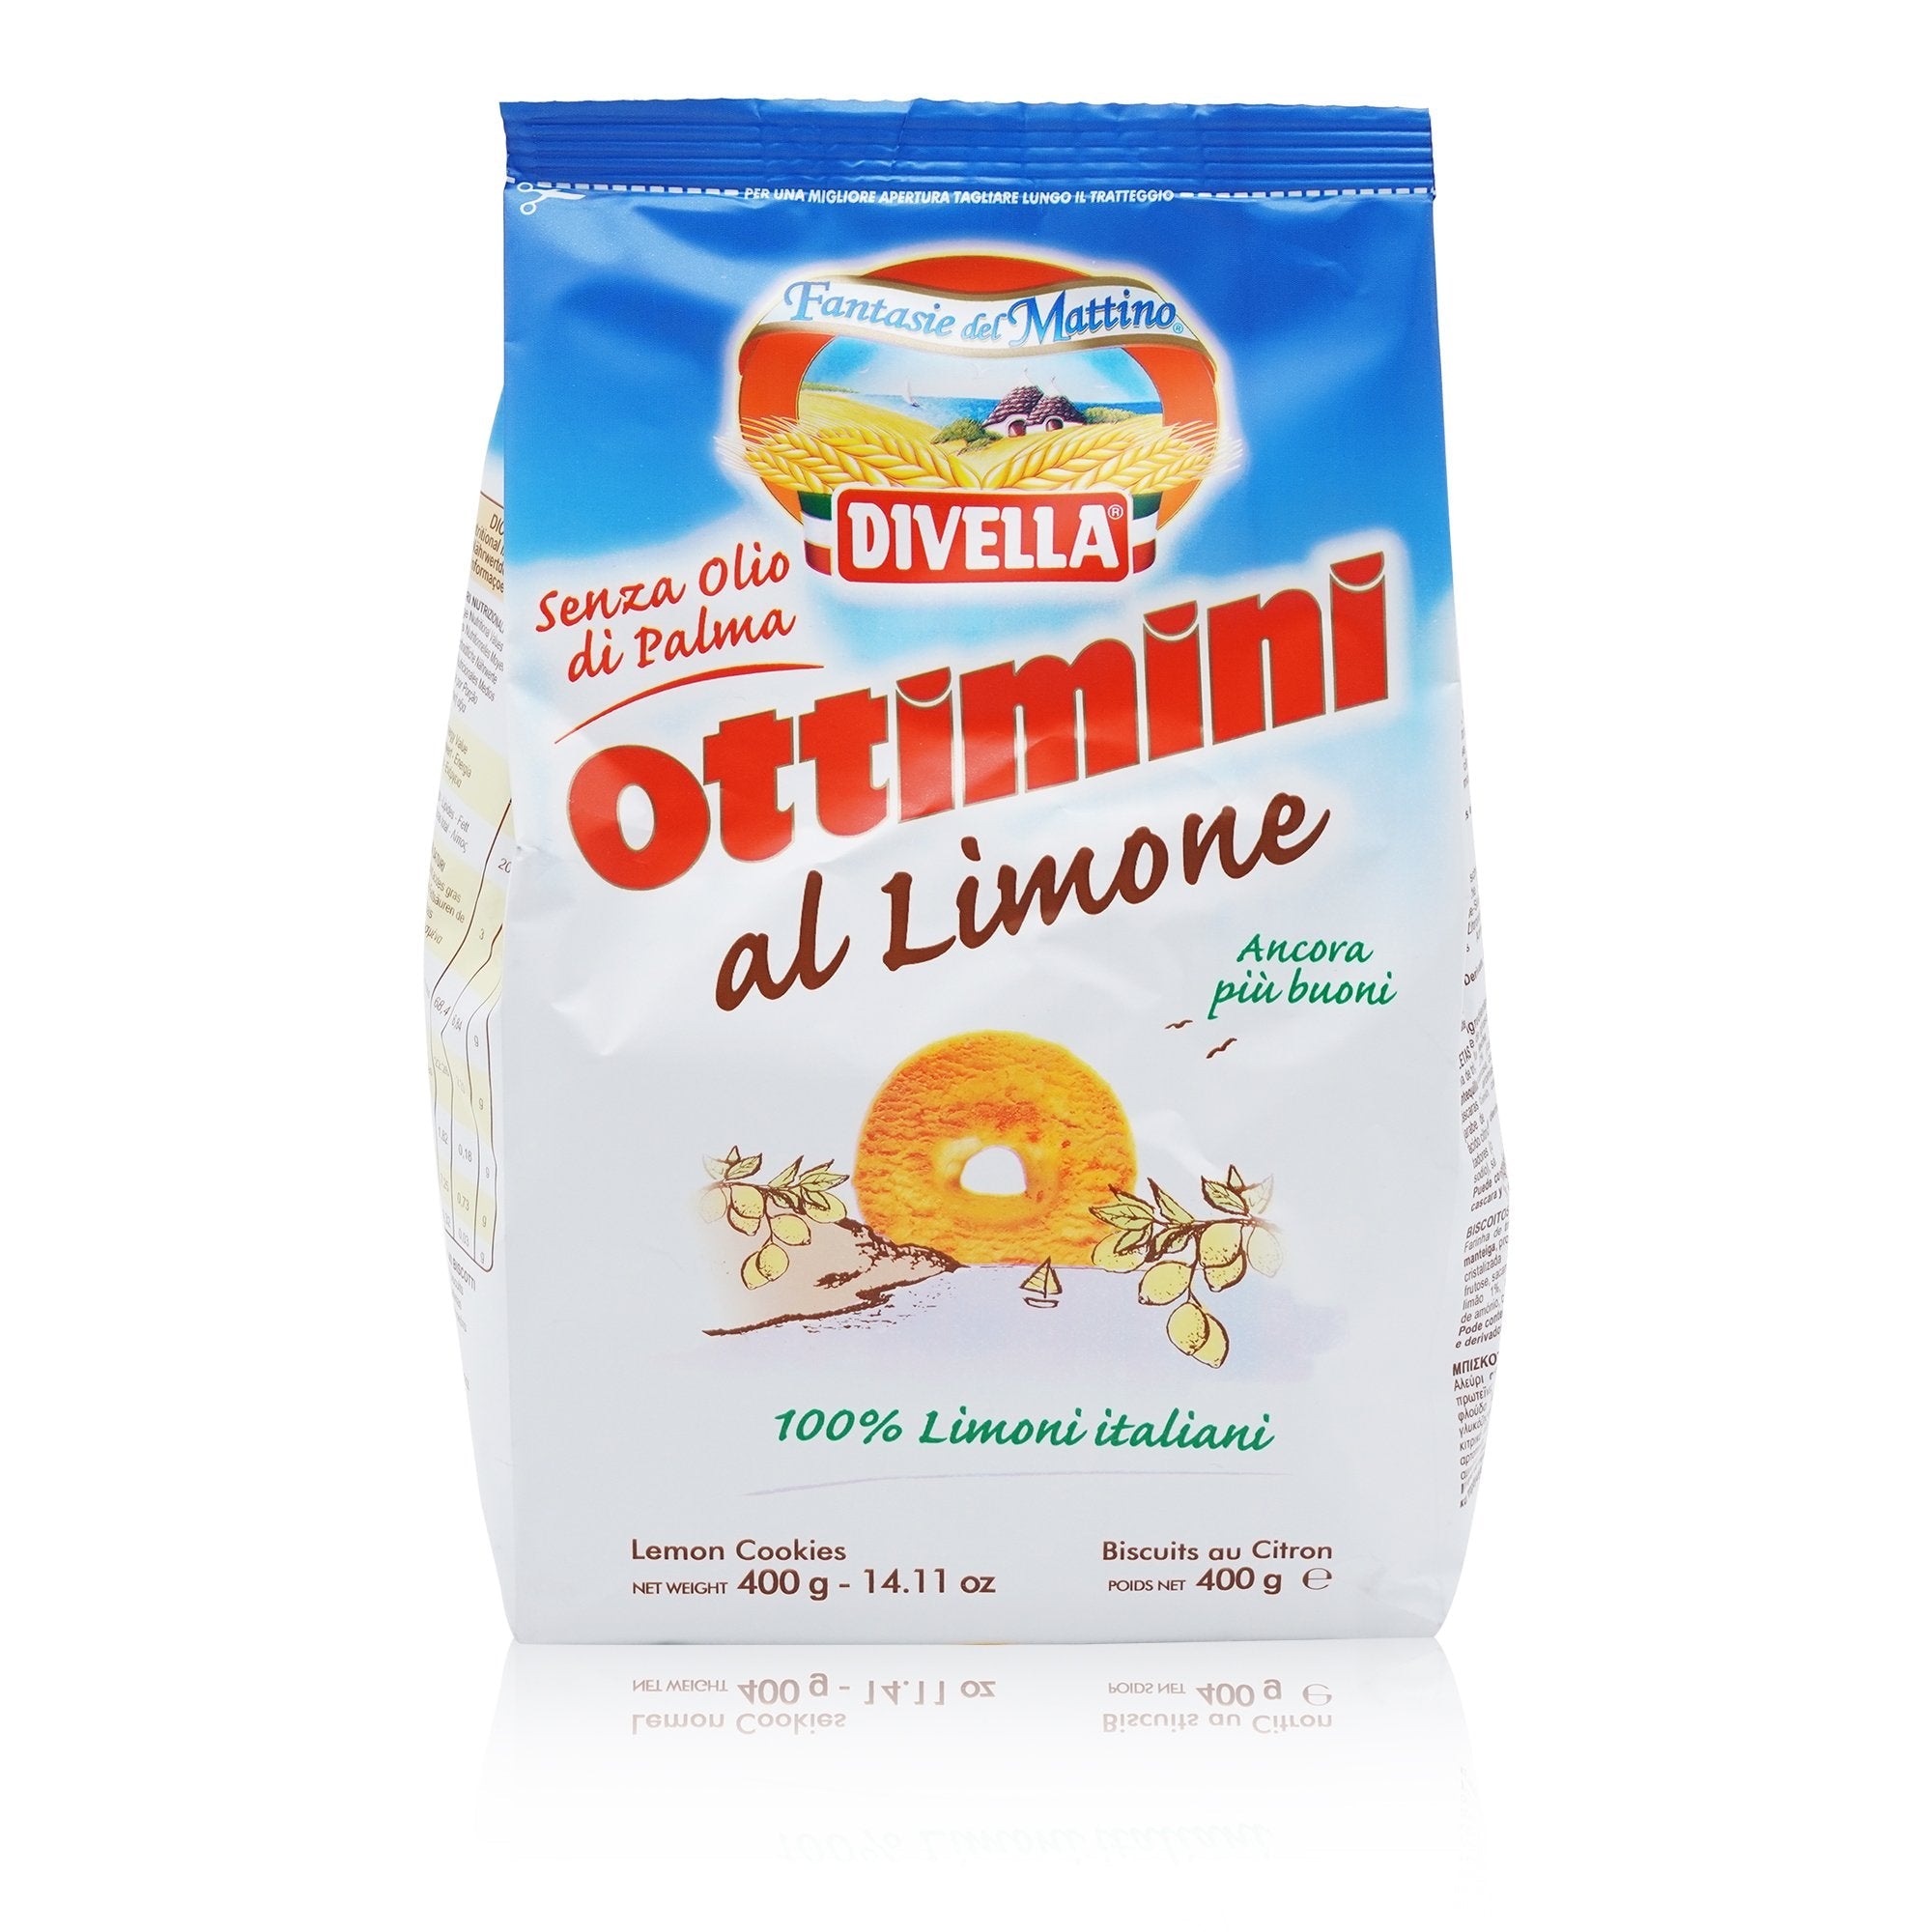 DIVELLA Biscotti Ottimini al limone – Zitronenkekse Ottimini - 0,400kg - italienisch-einkaufen.de